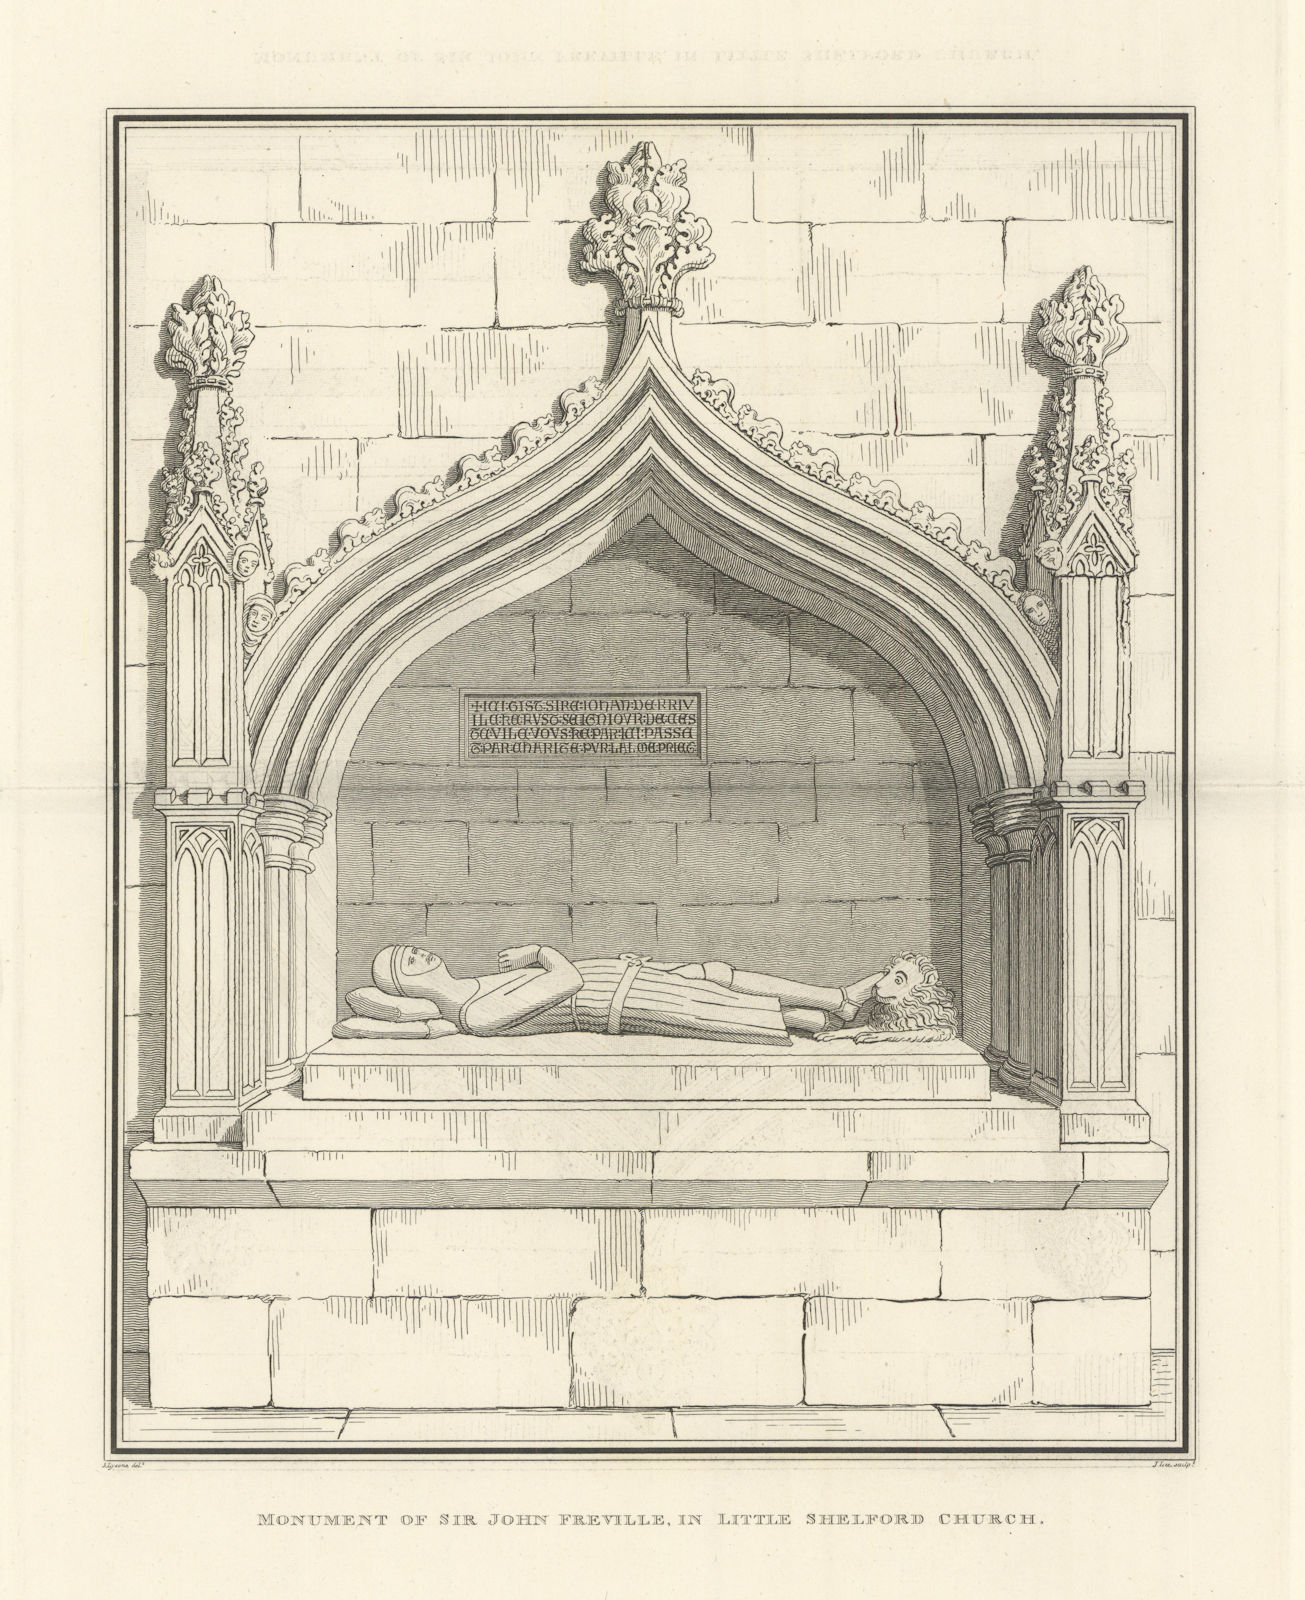 Associate Product Monument of Sir John de Freville in Little Shelford Church. LYSONS 1810 print